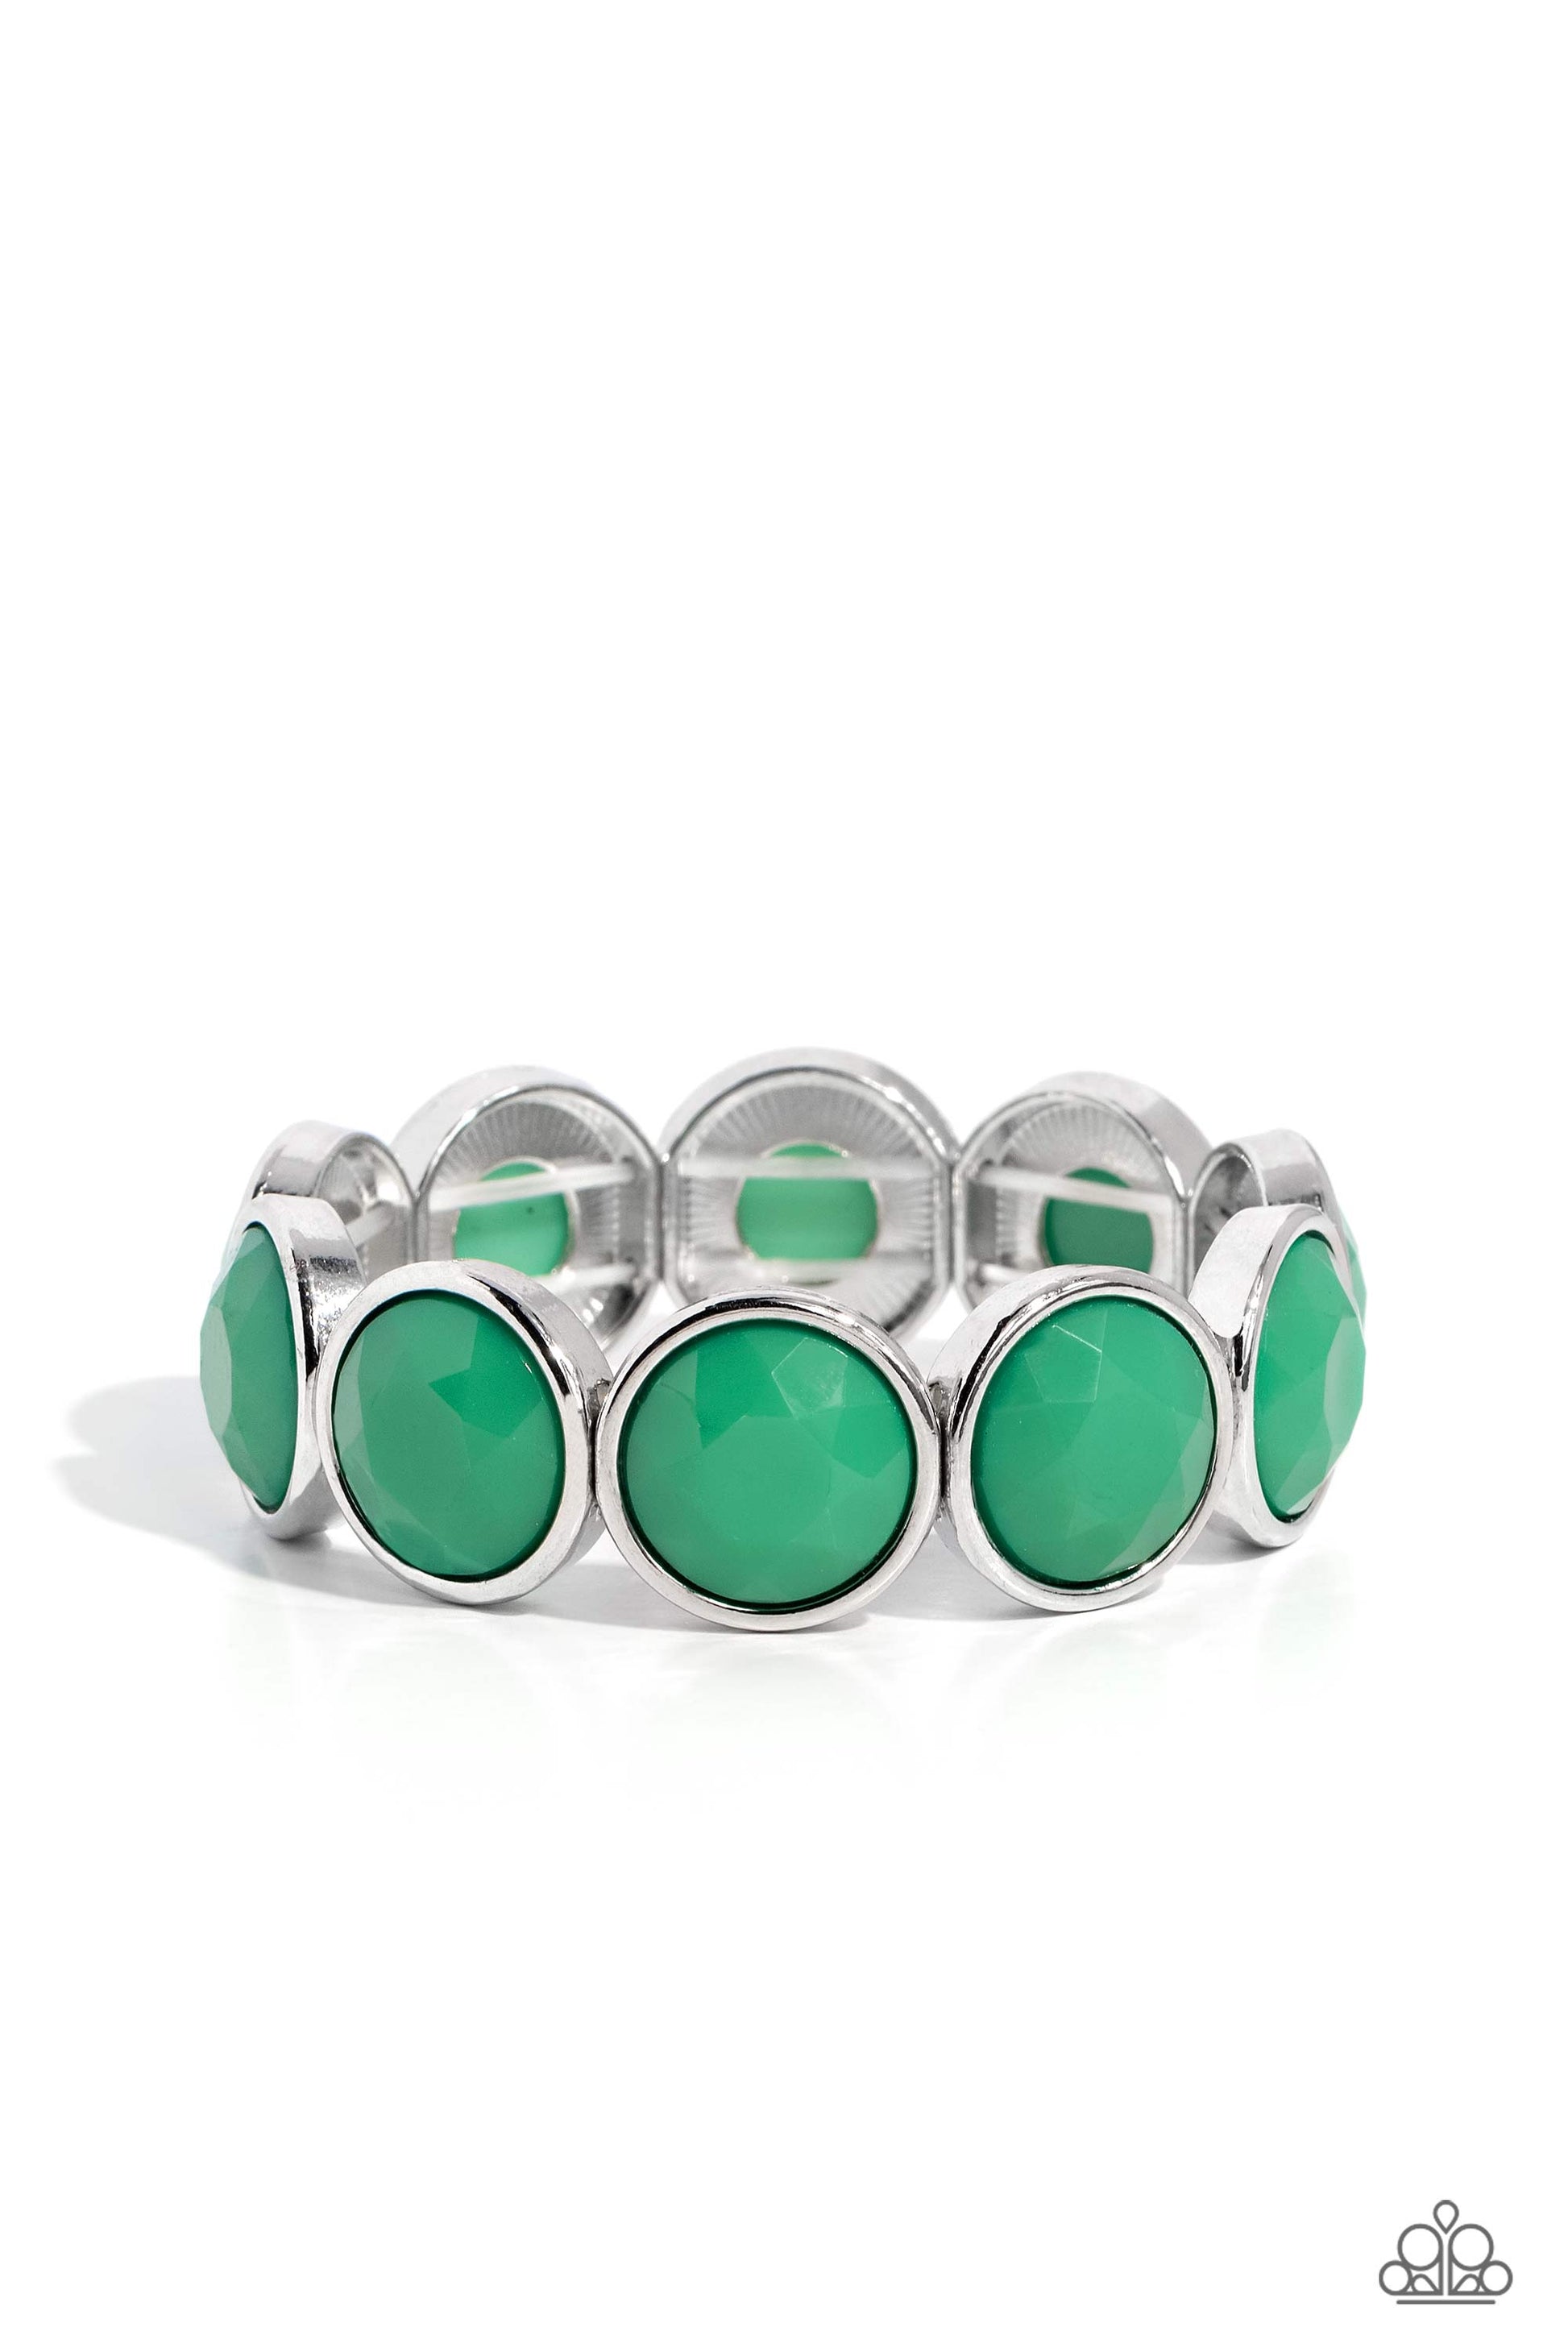 Long Live the Loud - green - Paparazzi bracelet